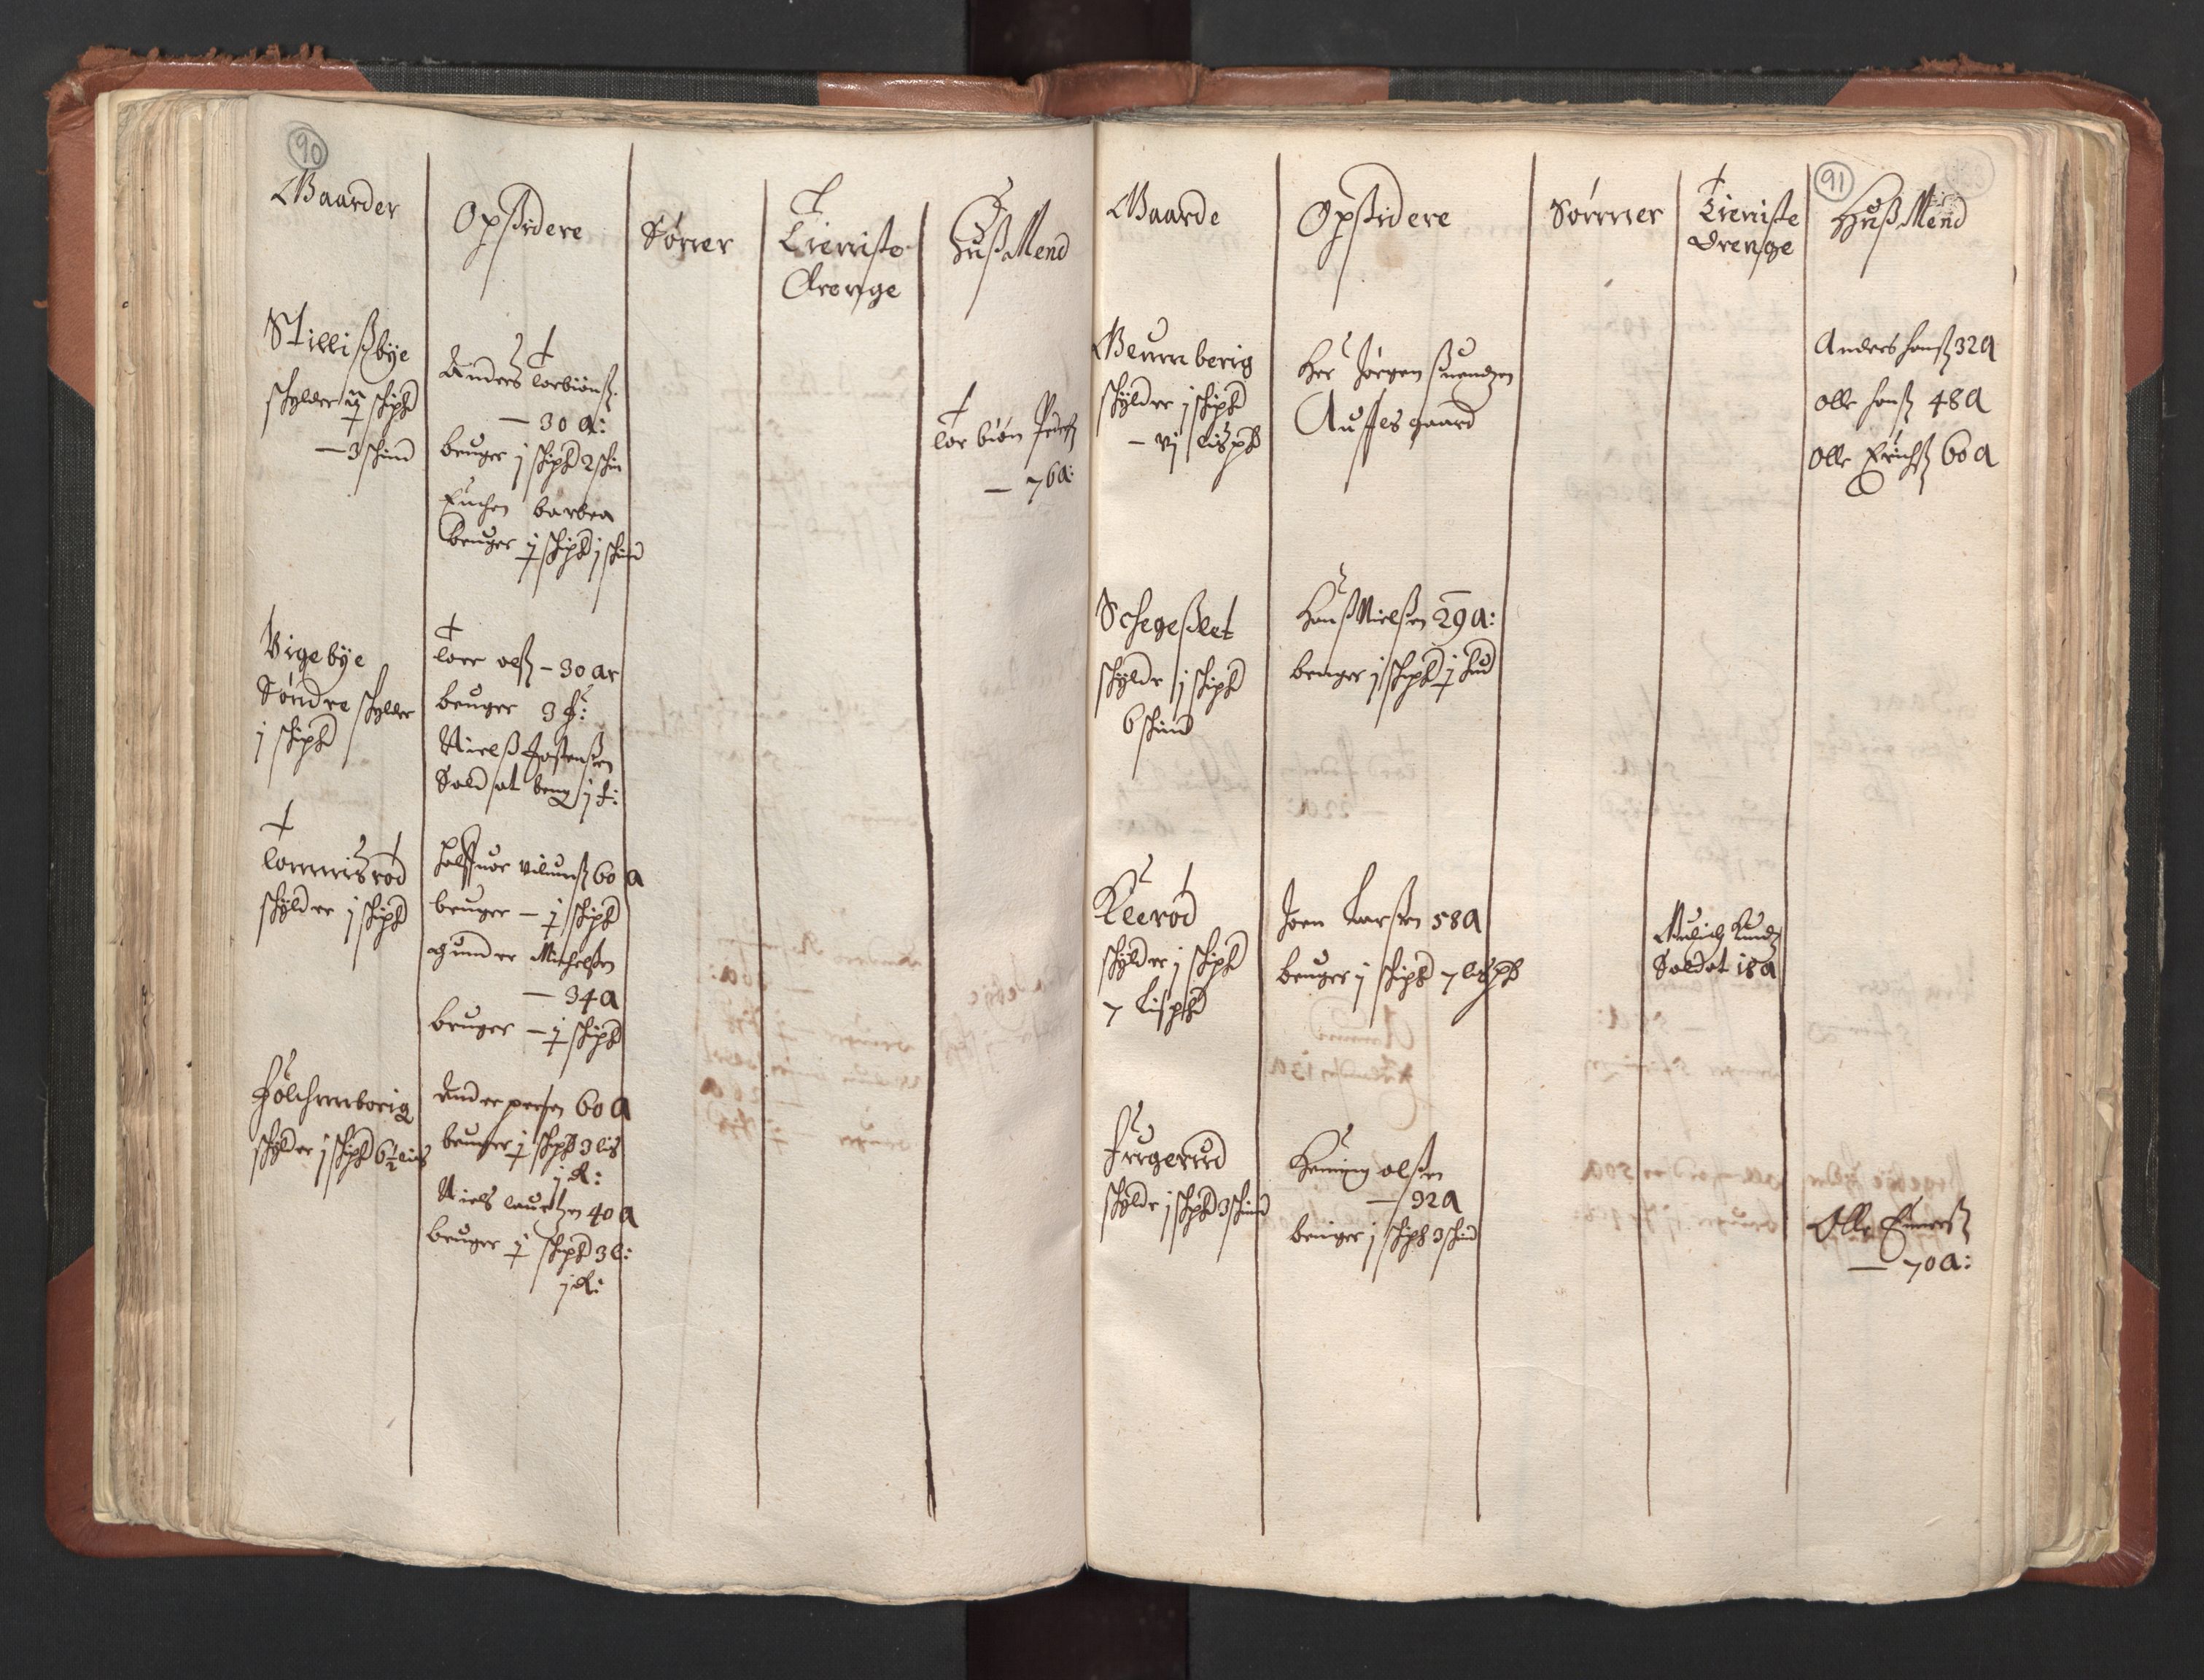 RA, Fogdenes og sorenskrivernes manntall 1664-1666, nr. 1: Fogderier (len og skipreider) i nåværende Østfold fylke, 1664, s. 90-91